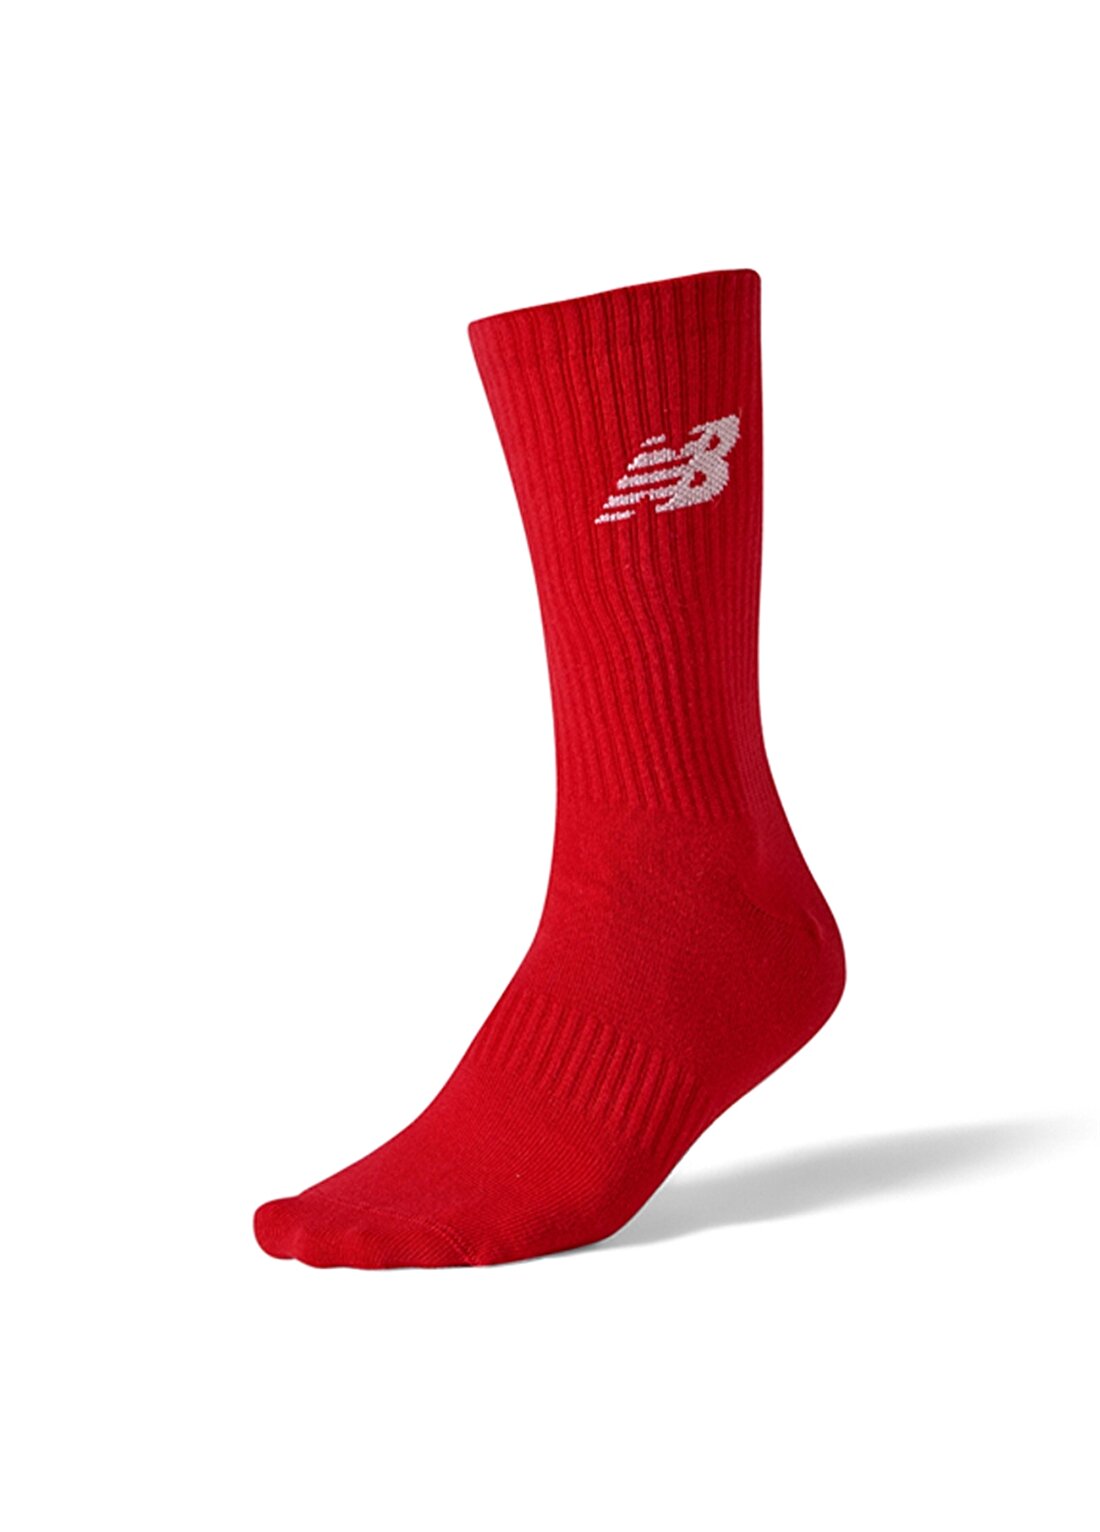 New Balance Kırmızı Unisex Çorap ANS3206-CHR-NB Lifestyle Socks